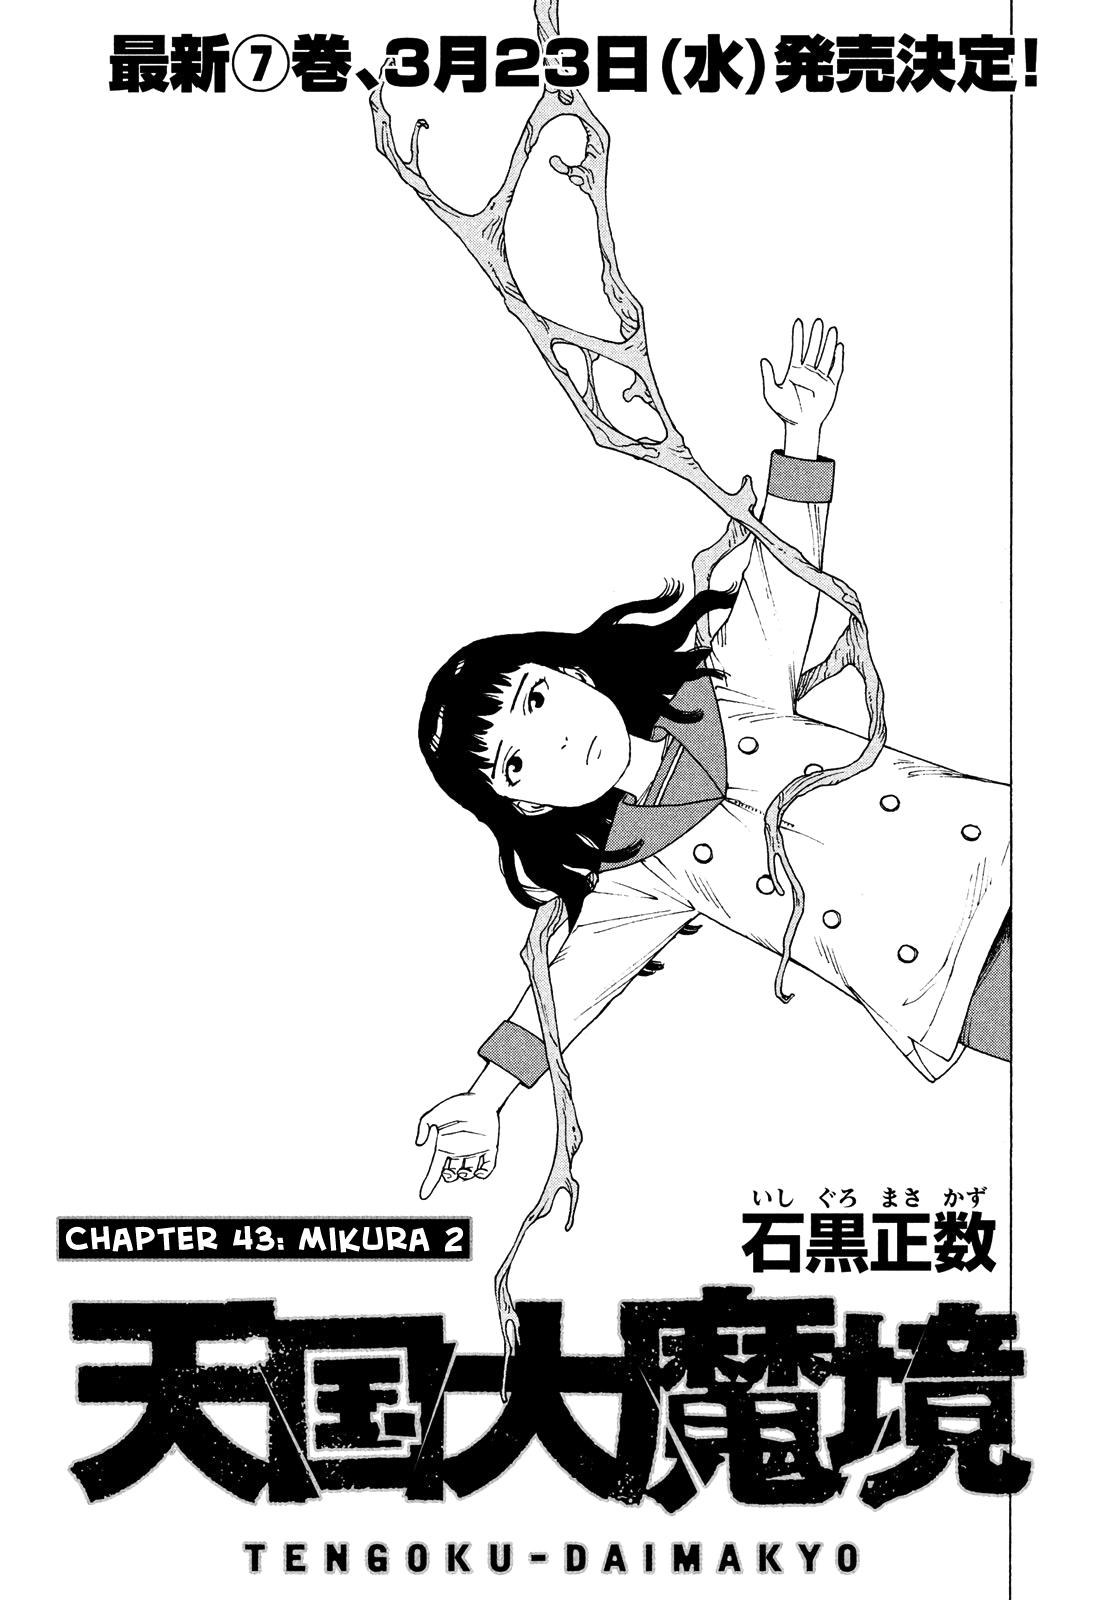 Read Tengoku Daimakyou Vol.8 Chapter 46: Sawatari Teruhiko - Manganelo